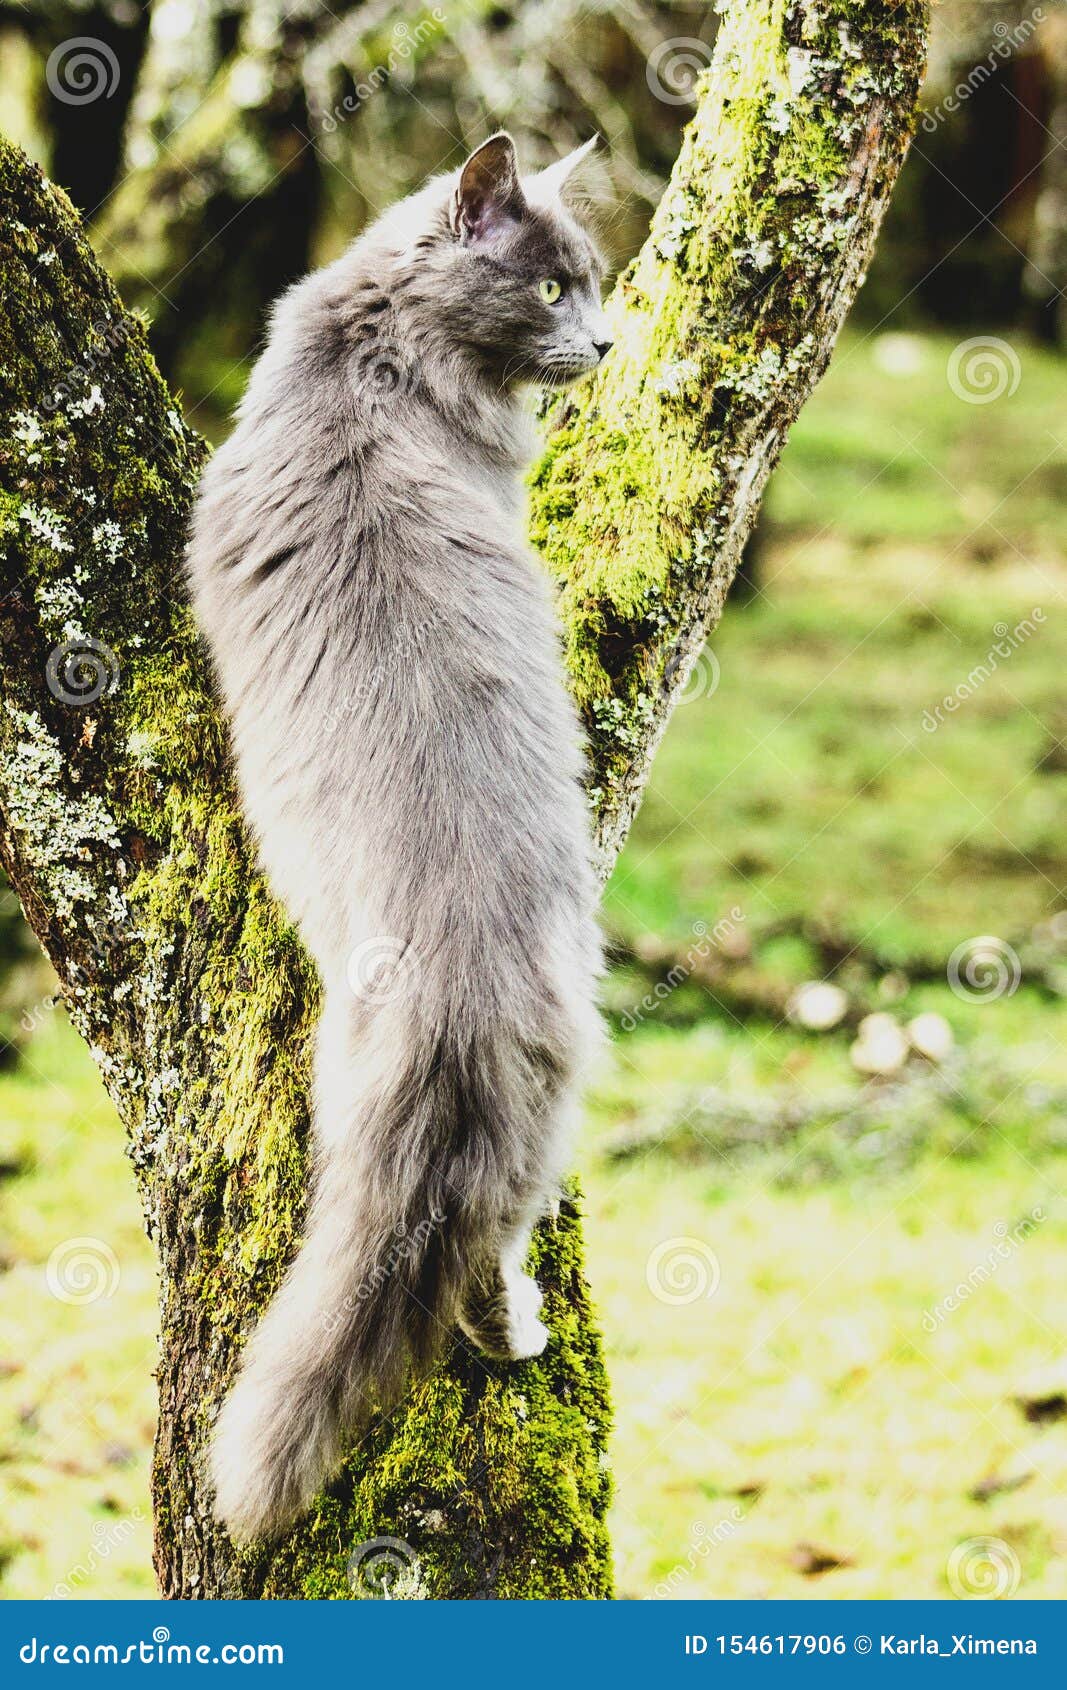 cat climbing the tree